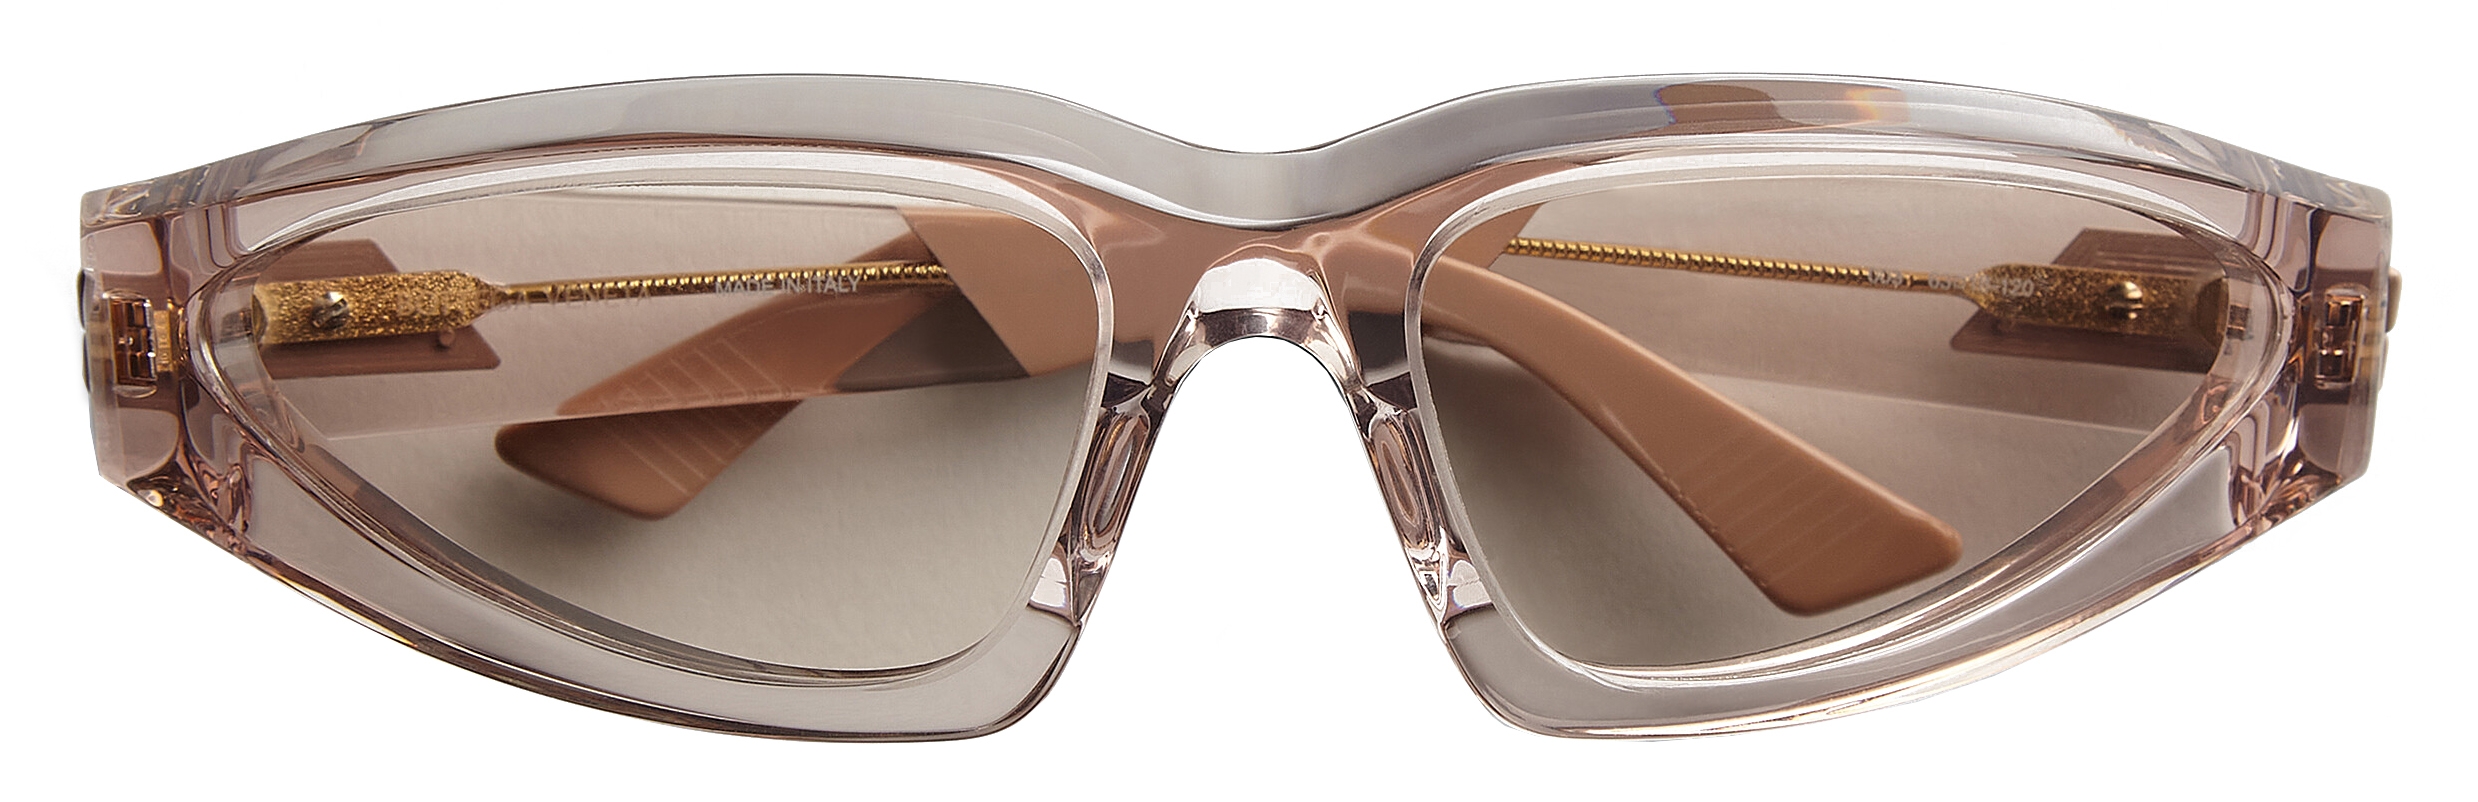 Bottega Veneta Eyewear Wraparound Sunglasses – Cettire